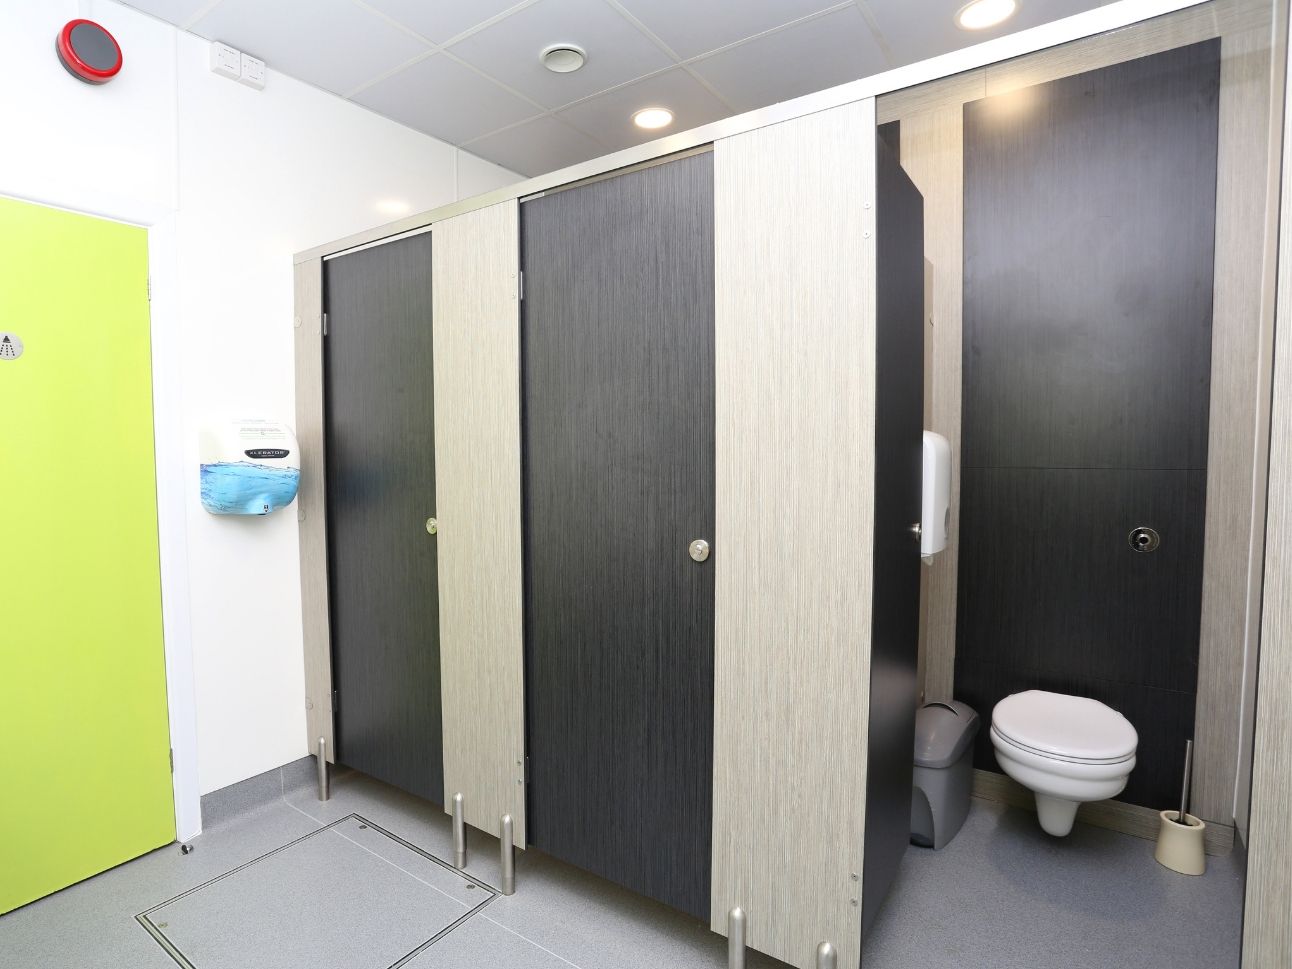 Standard toilet cubicle sizes